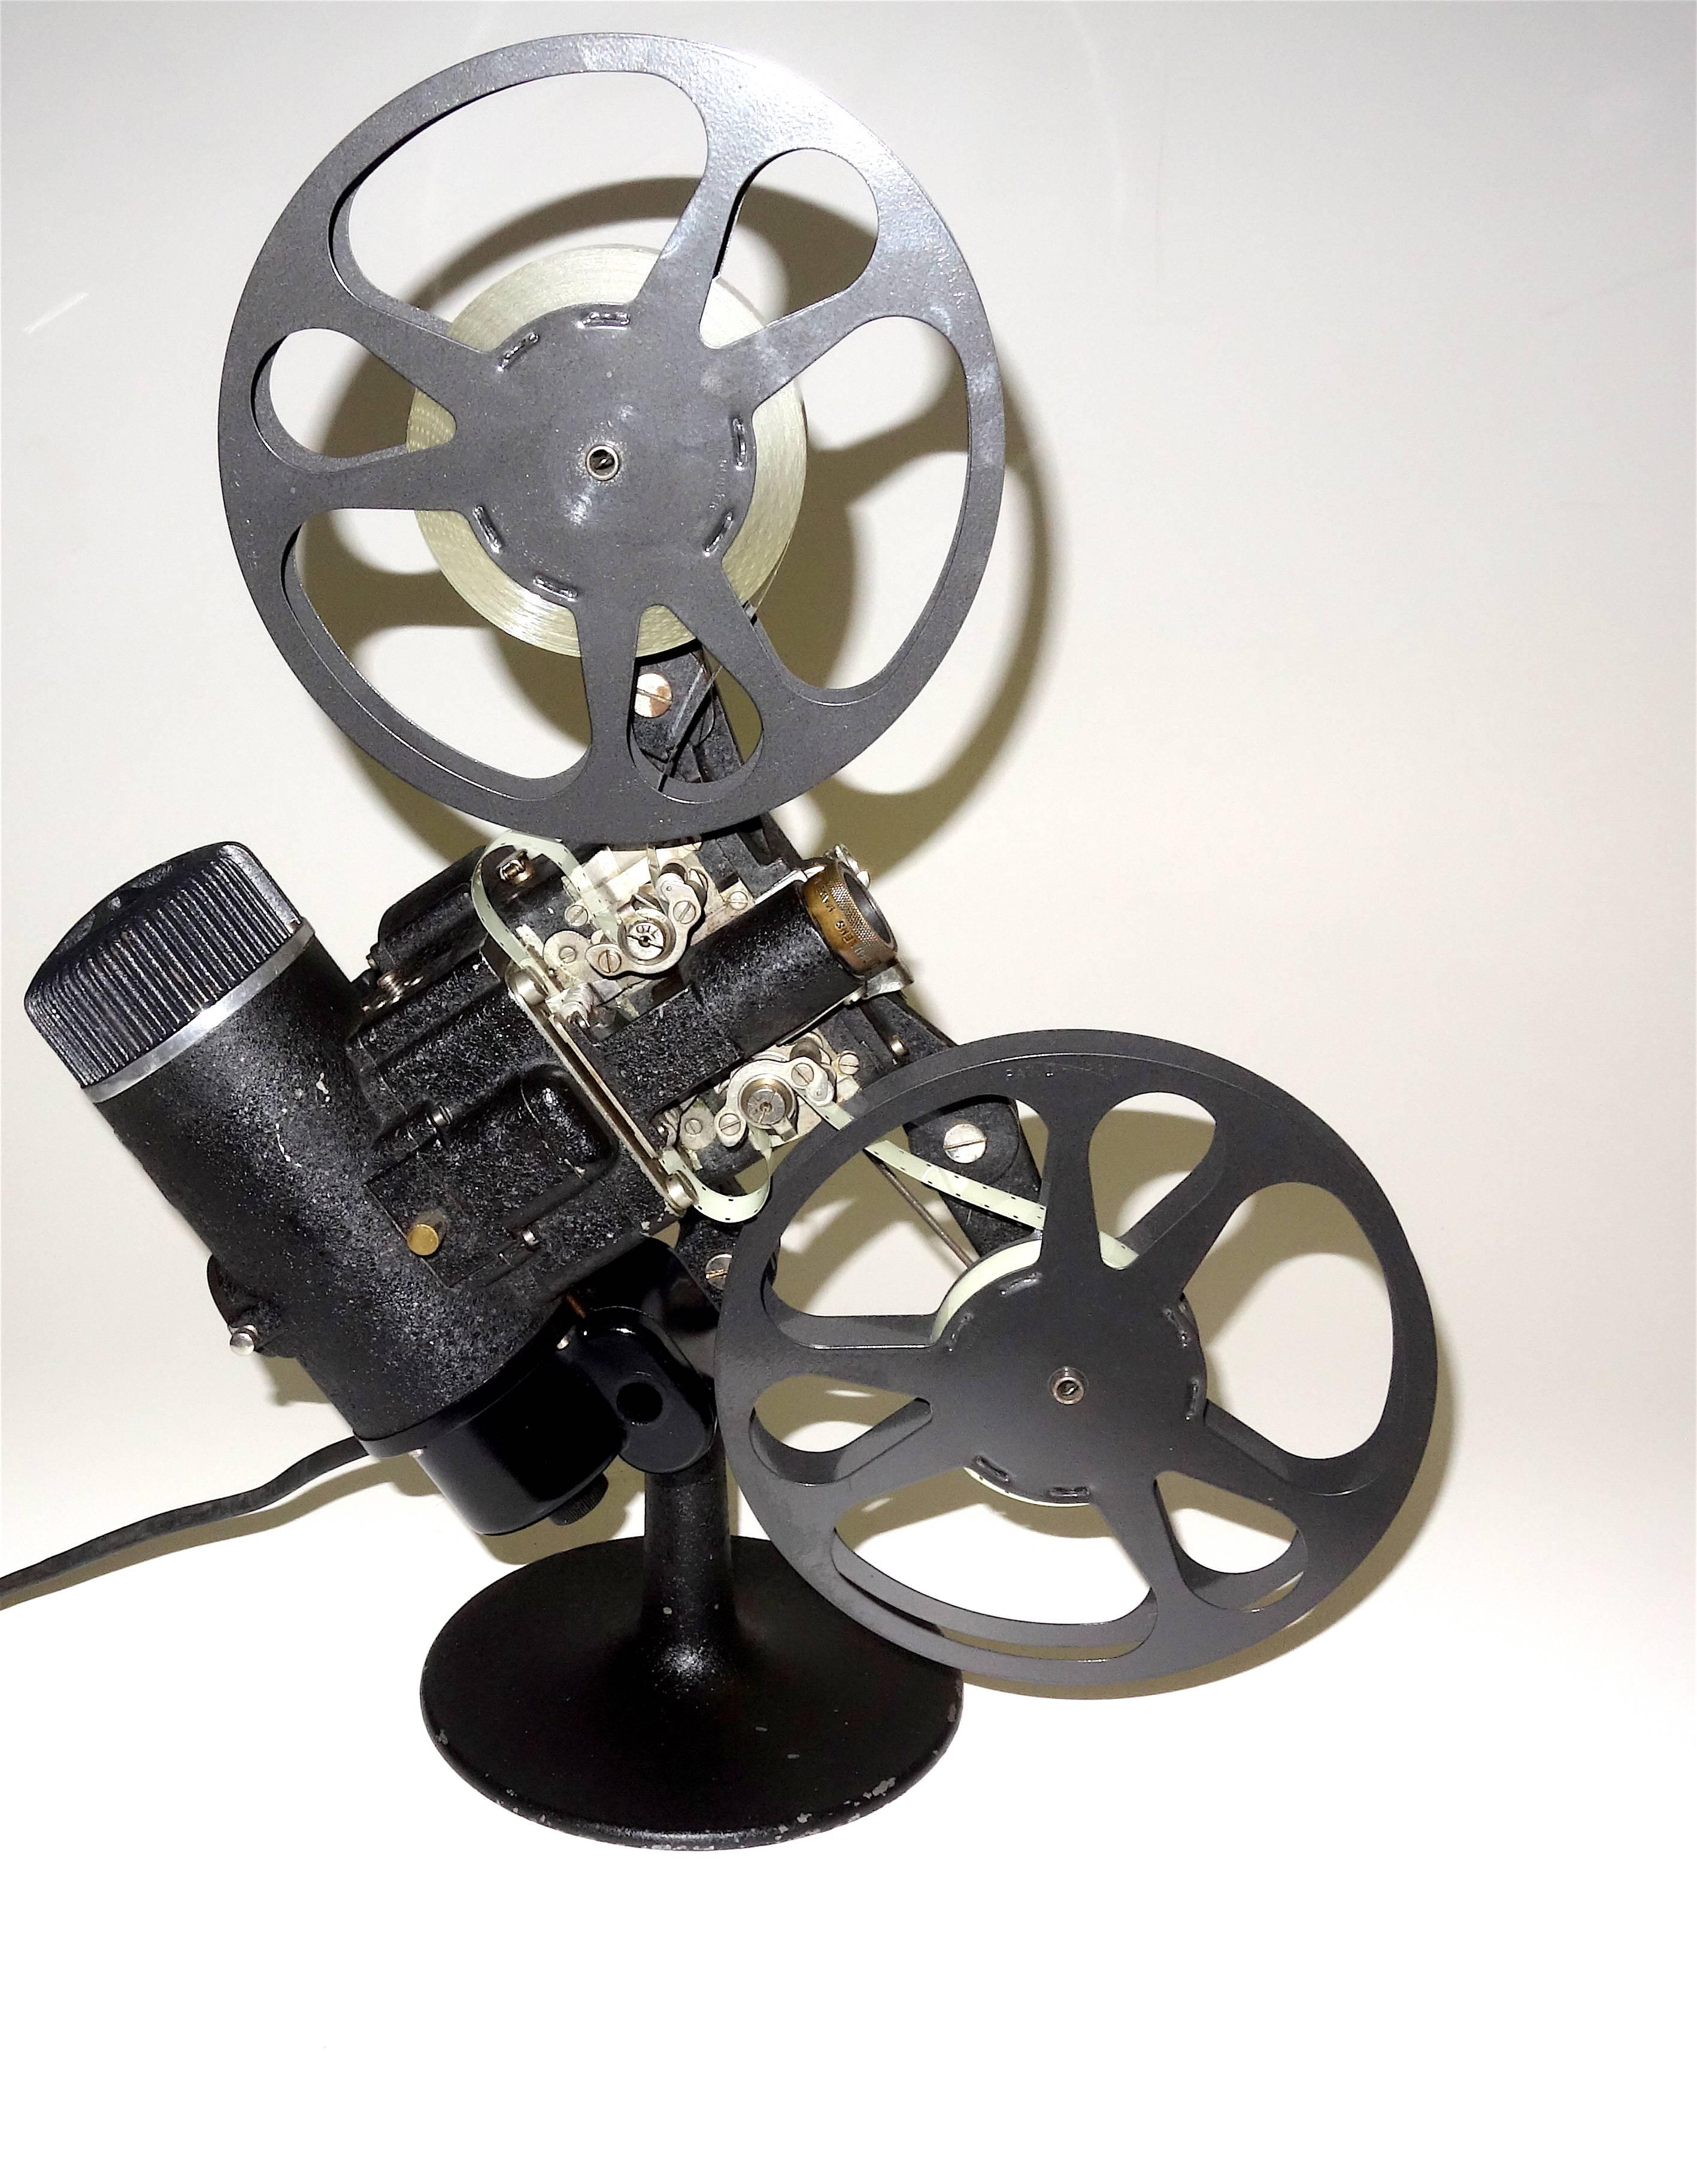 First Model 16MM Cinema Movie Projector, circa 1923, Rare Sculpture Take 50% OFF 4